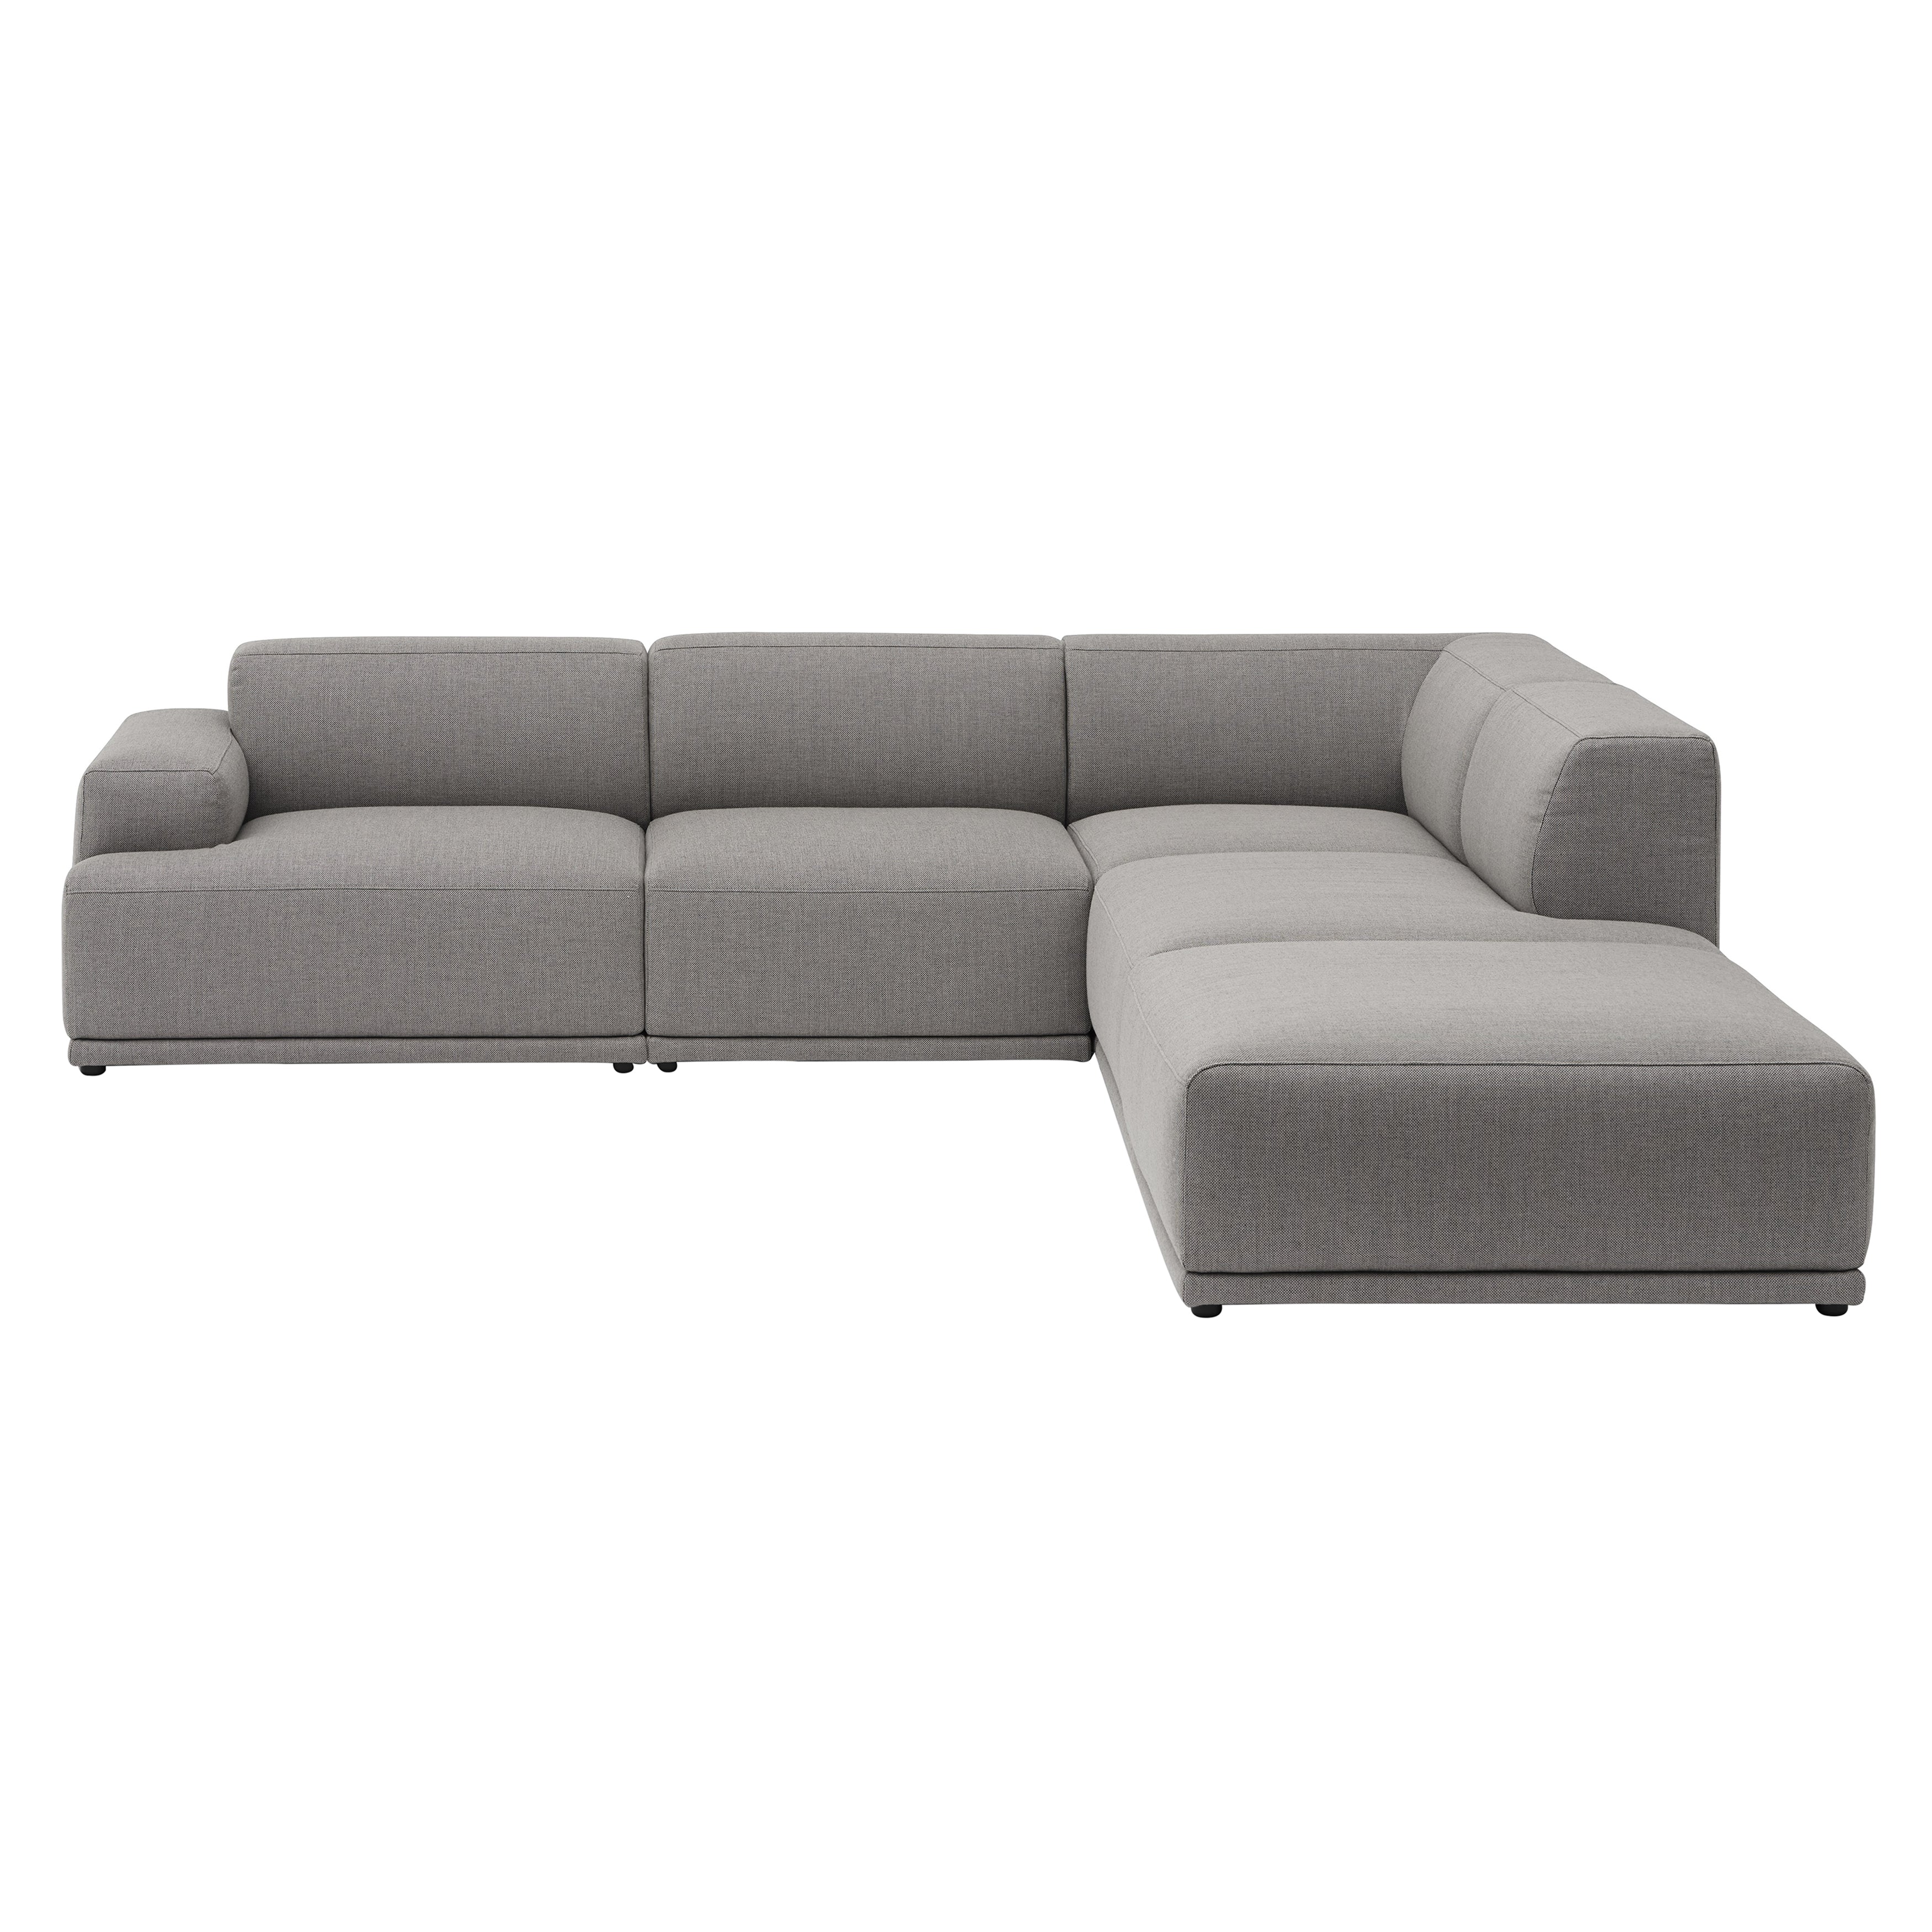 Connect Soft Modular Sofa: Corner + Configuration 2